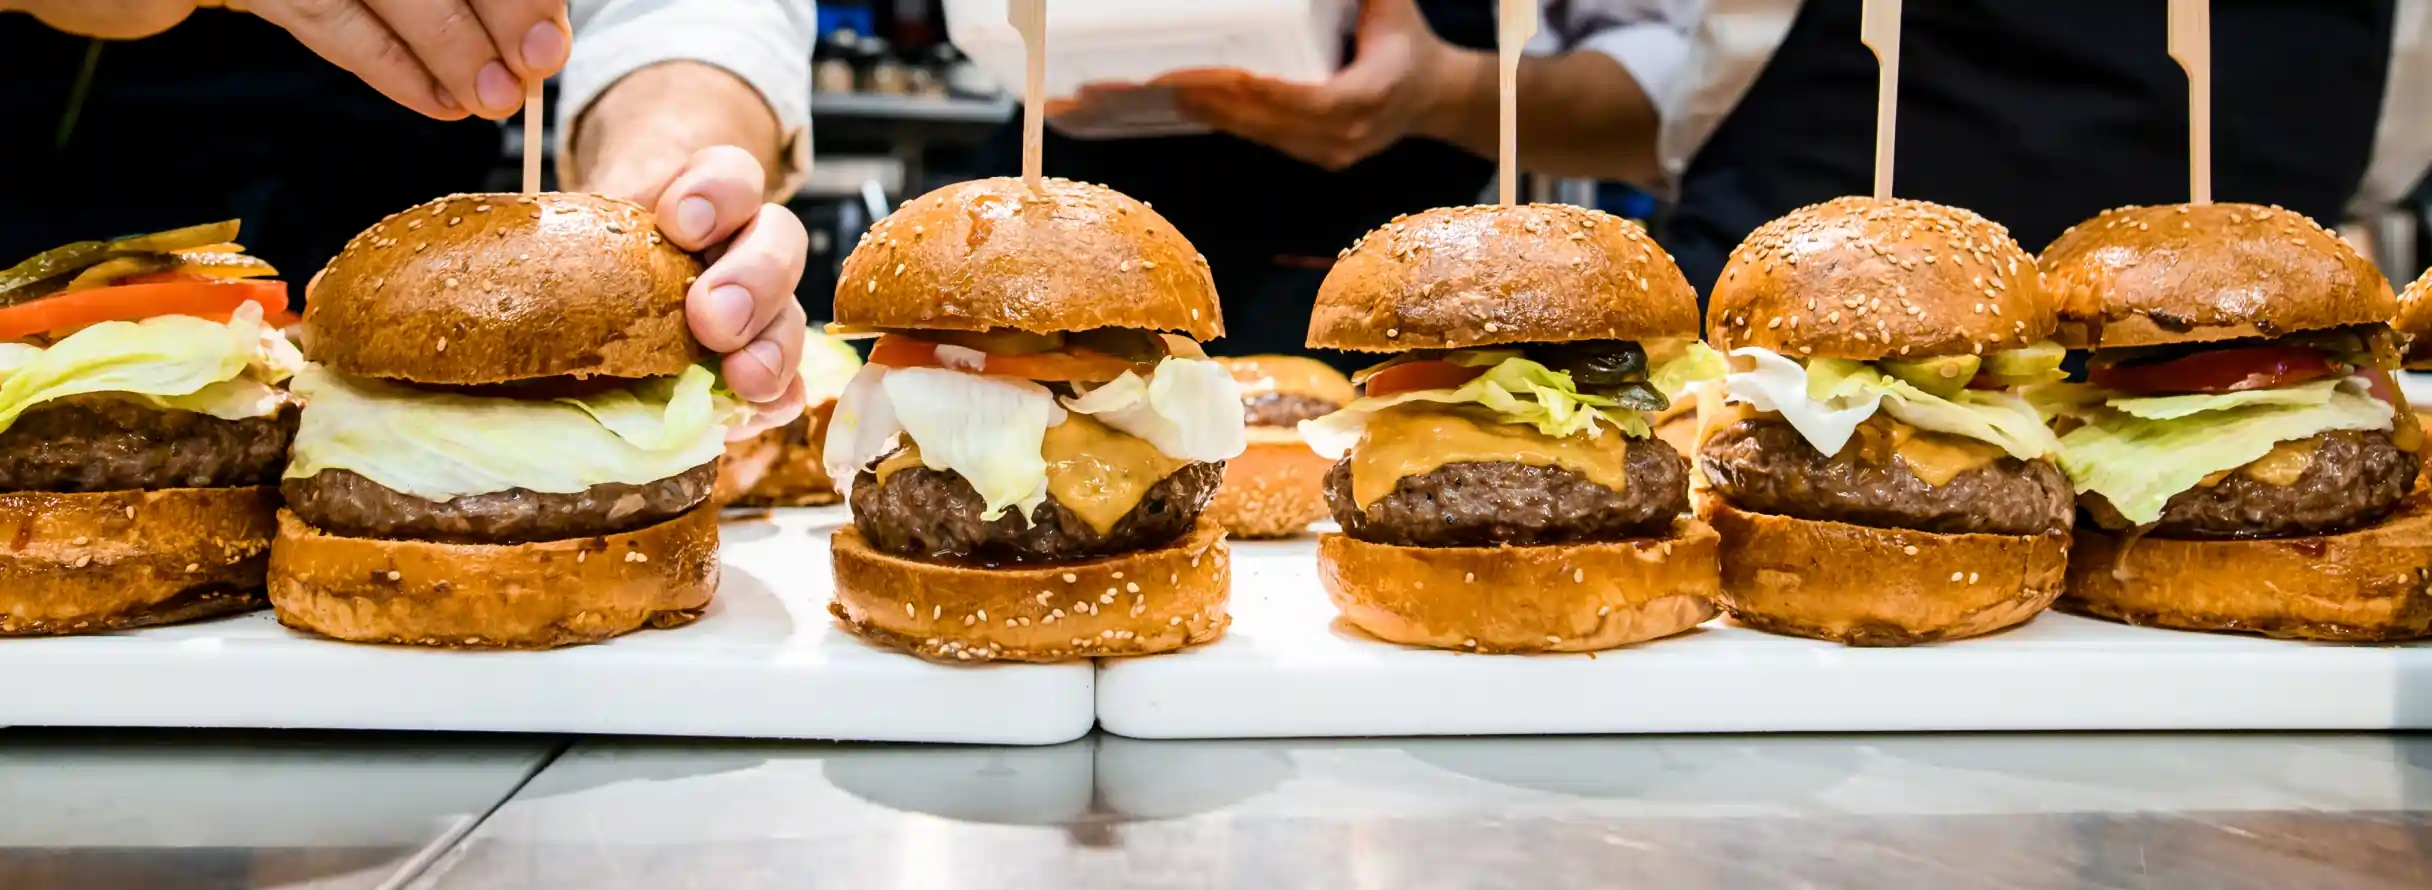 aurora-restaurant-hamburgers